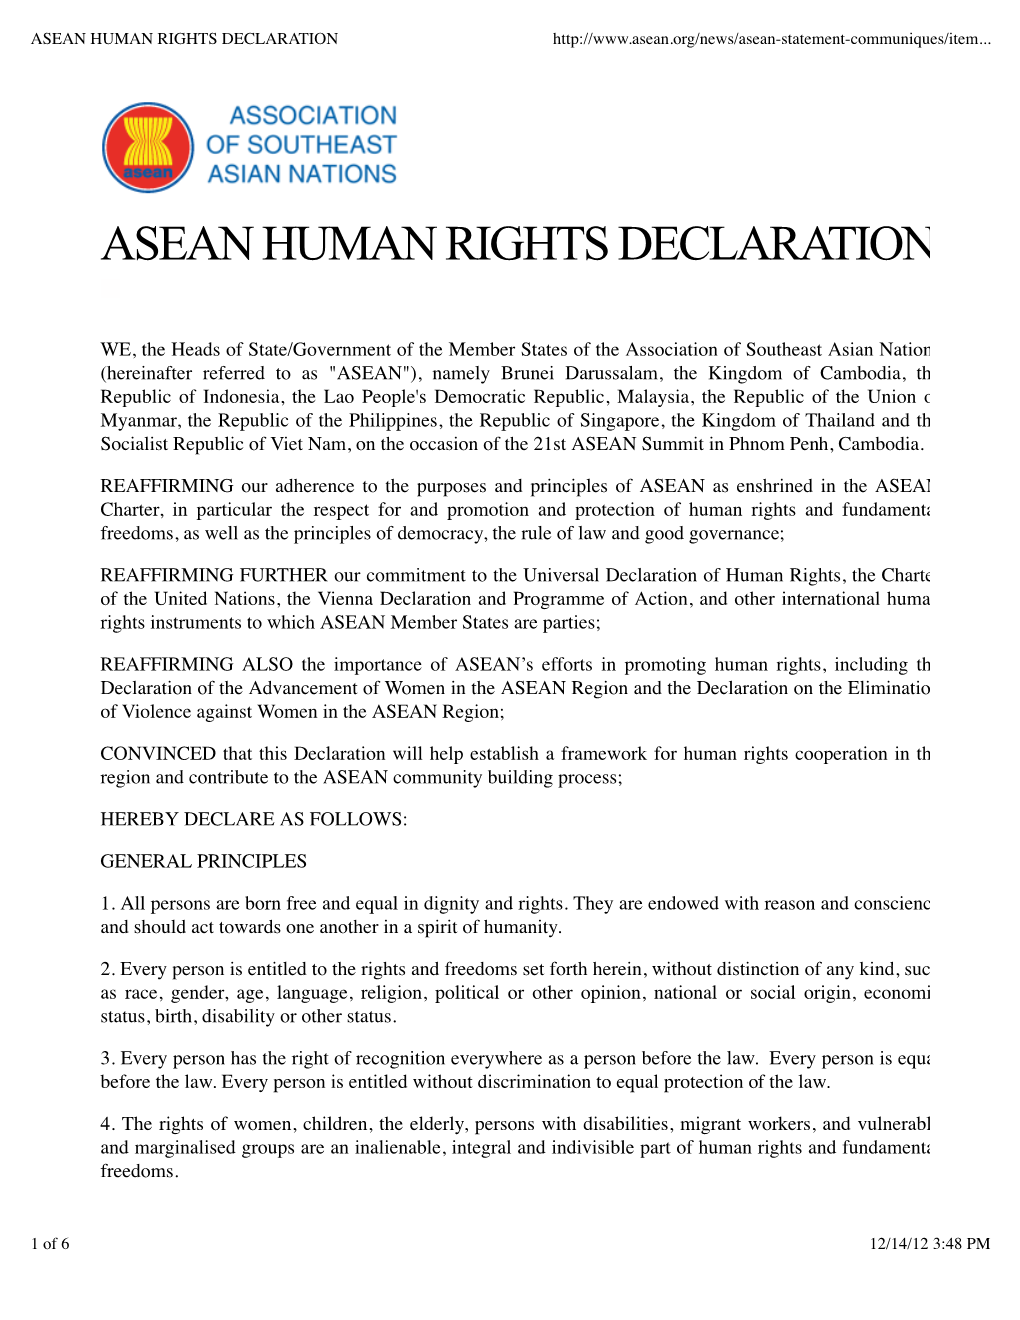 Asean Human Rights Declaration